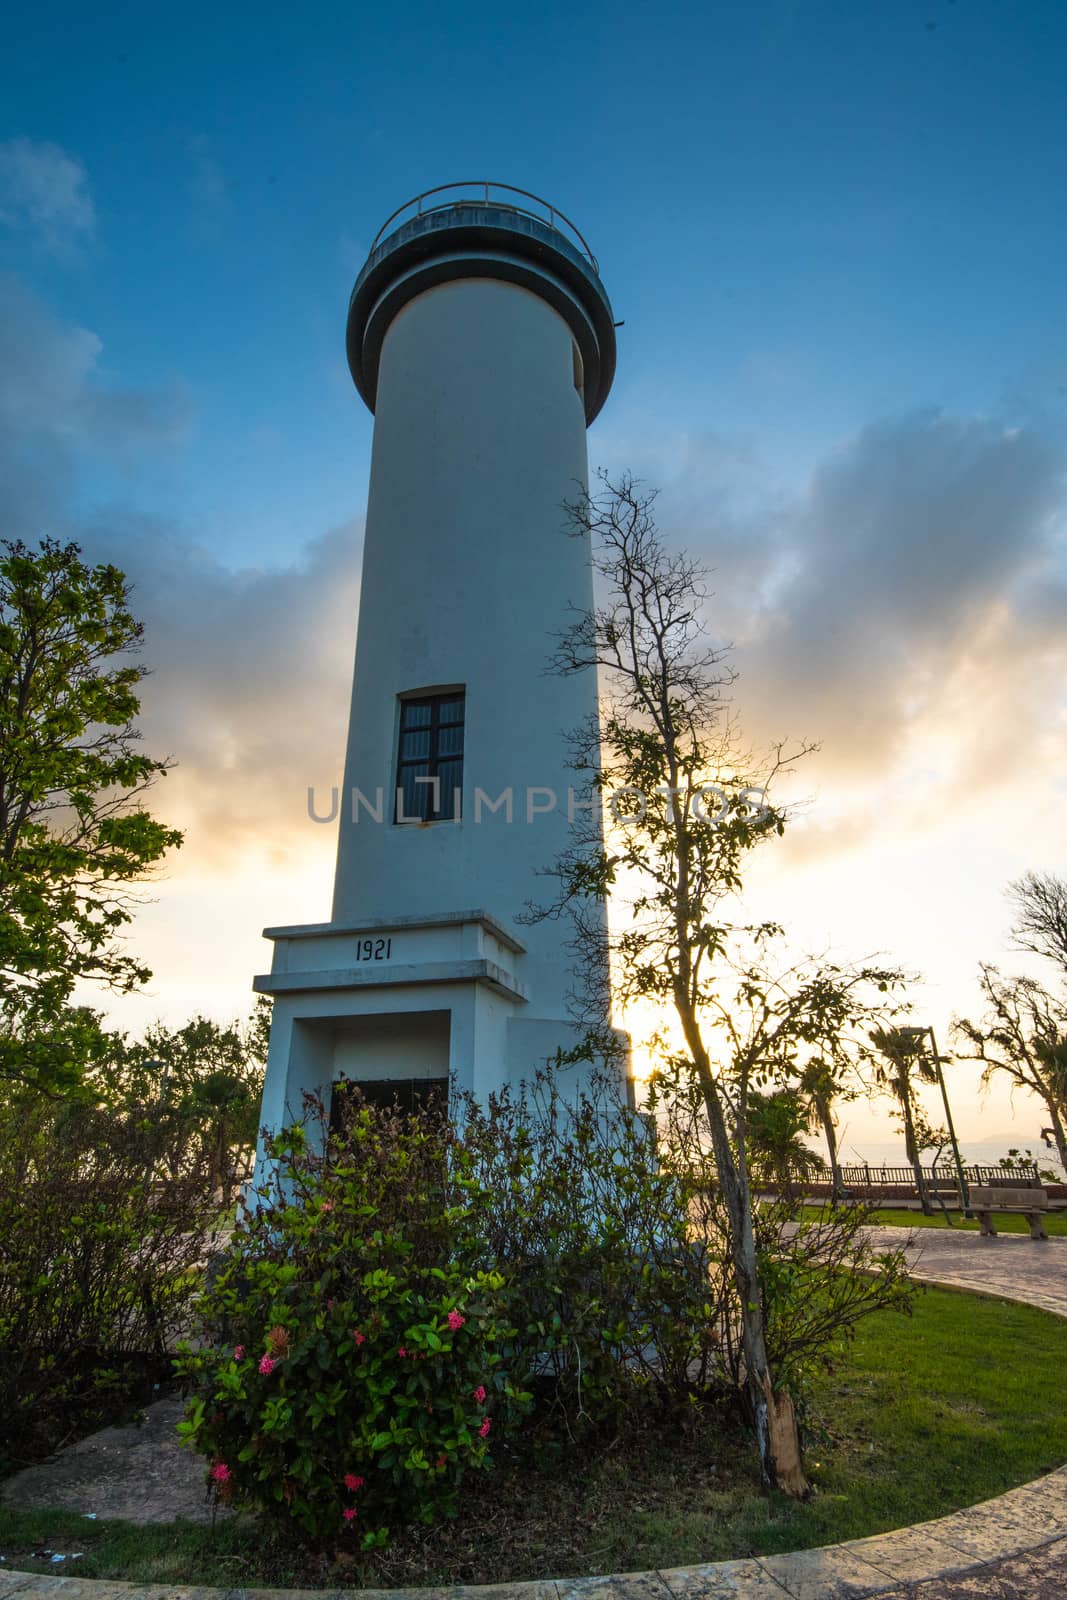 Sunset shot at Punta Higuera lighthouse.